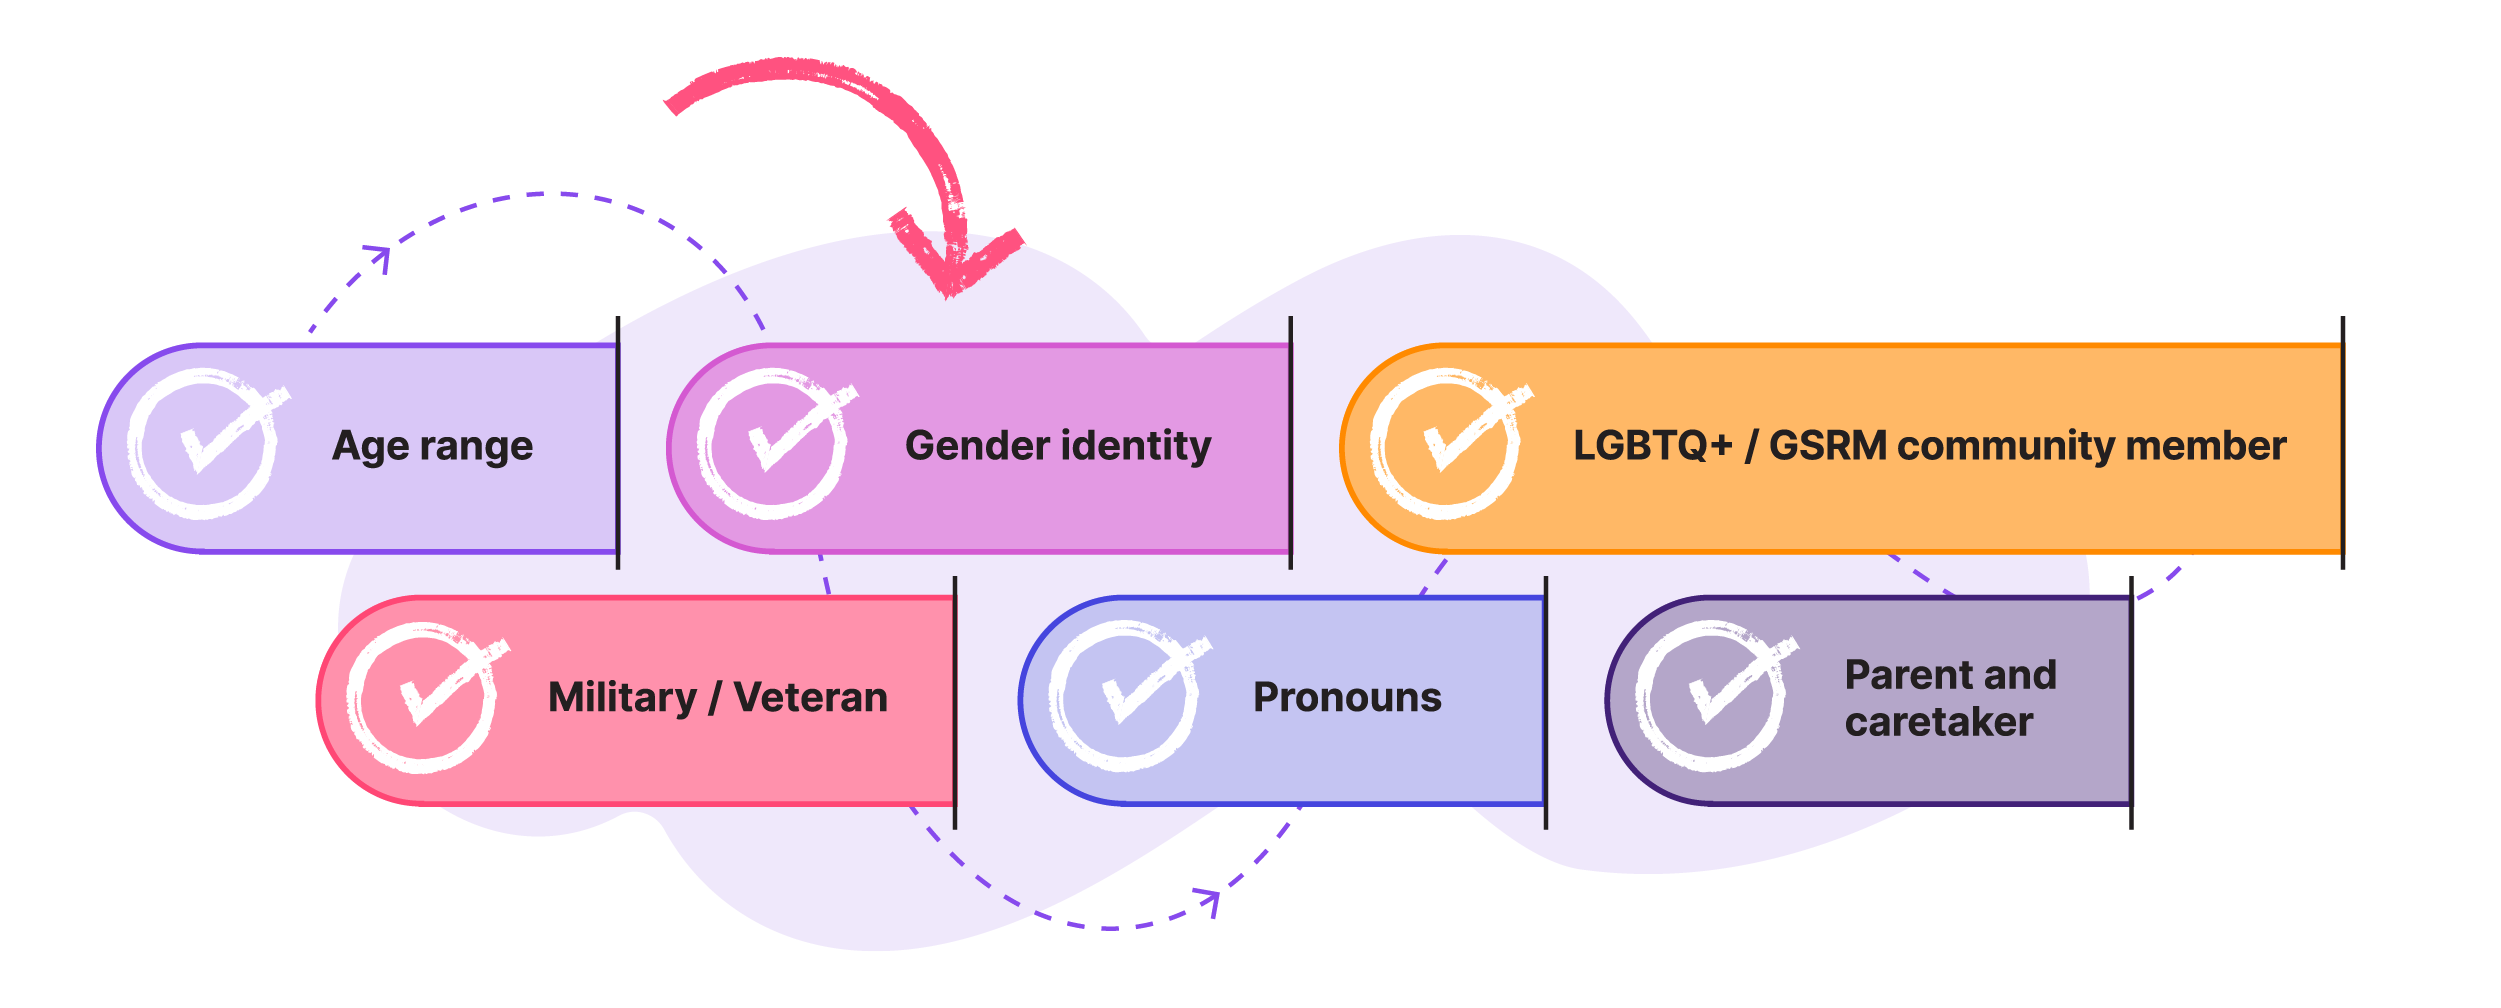 Age range, Gender identity, LGBTQ+ / GSRM community member, Military / Veteran, Pronouns, Parent and caretaker